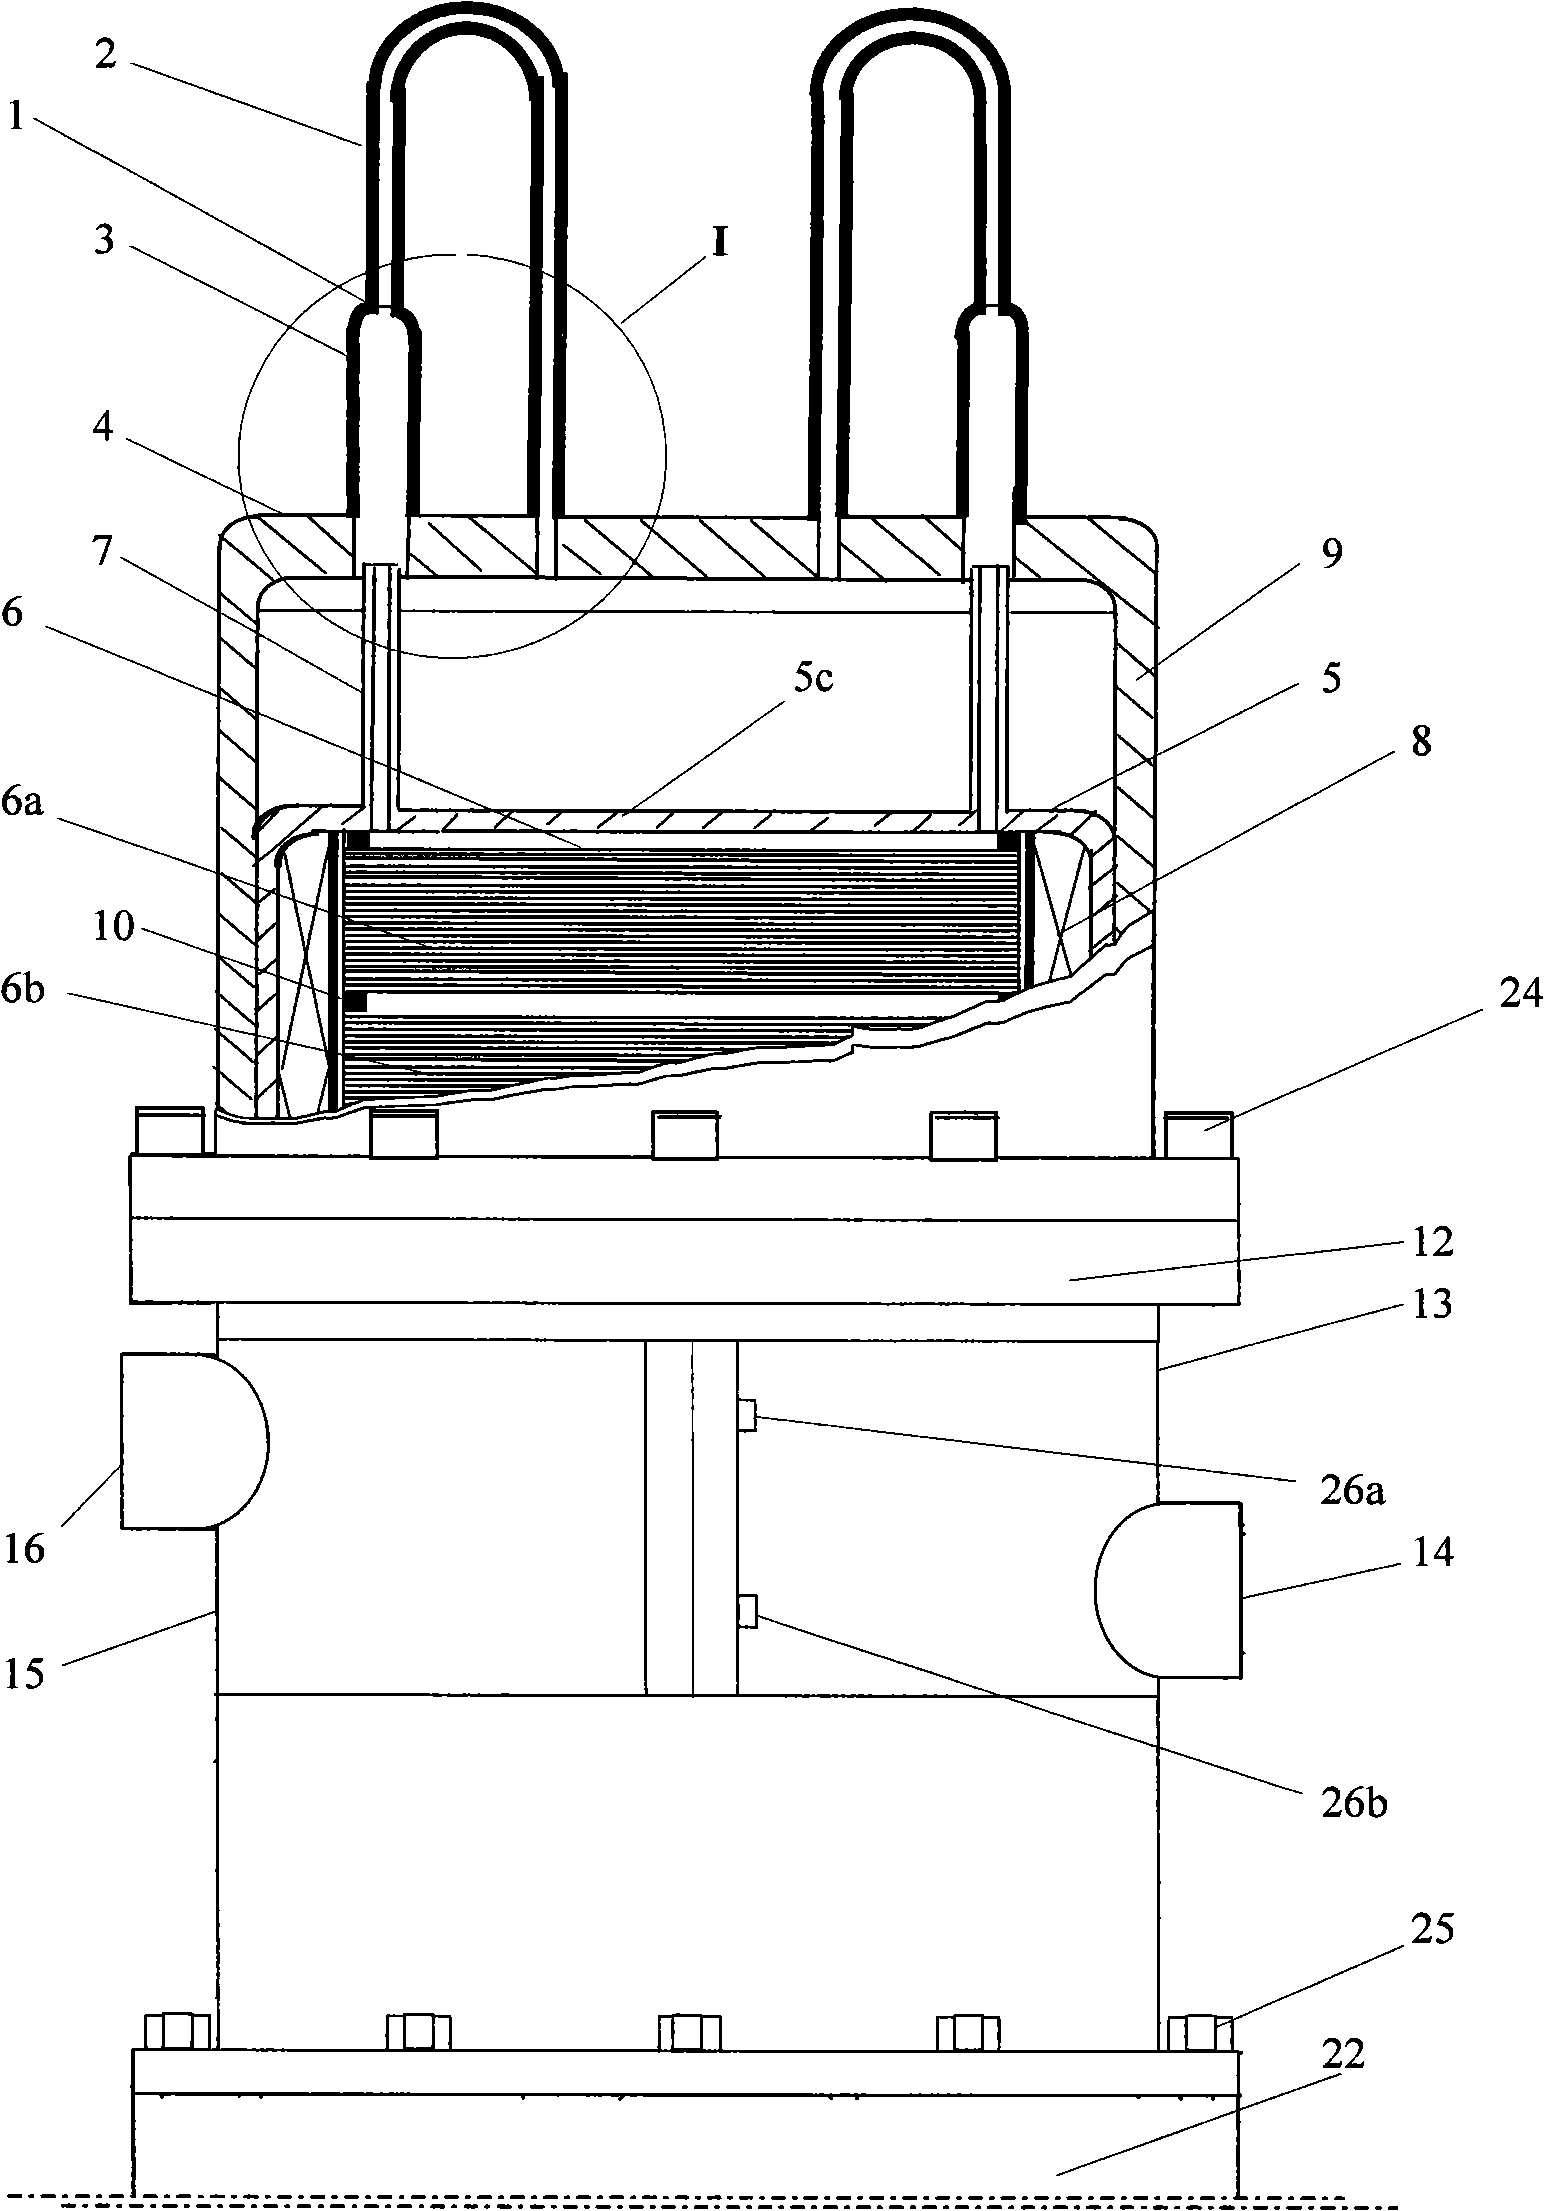 Gas distribution piston type Stirling engine